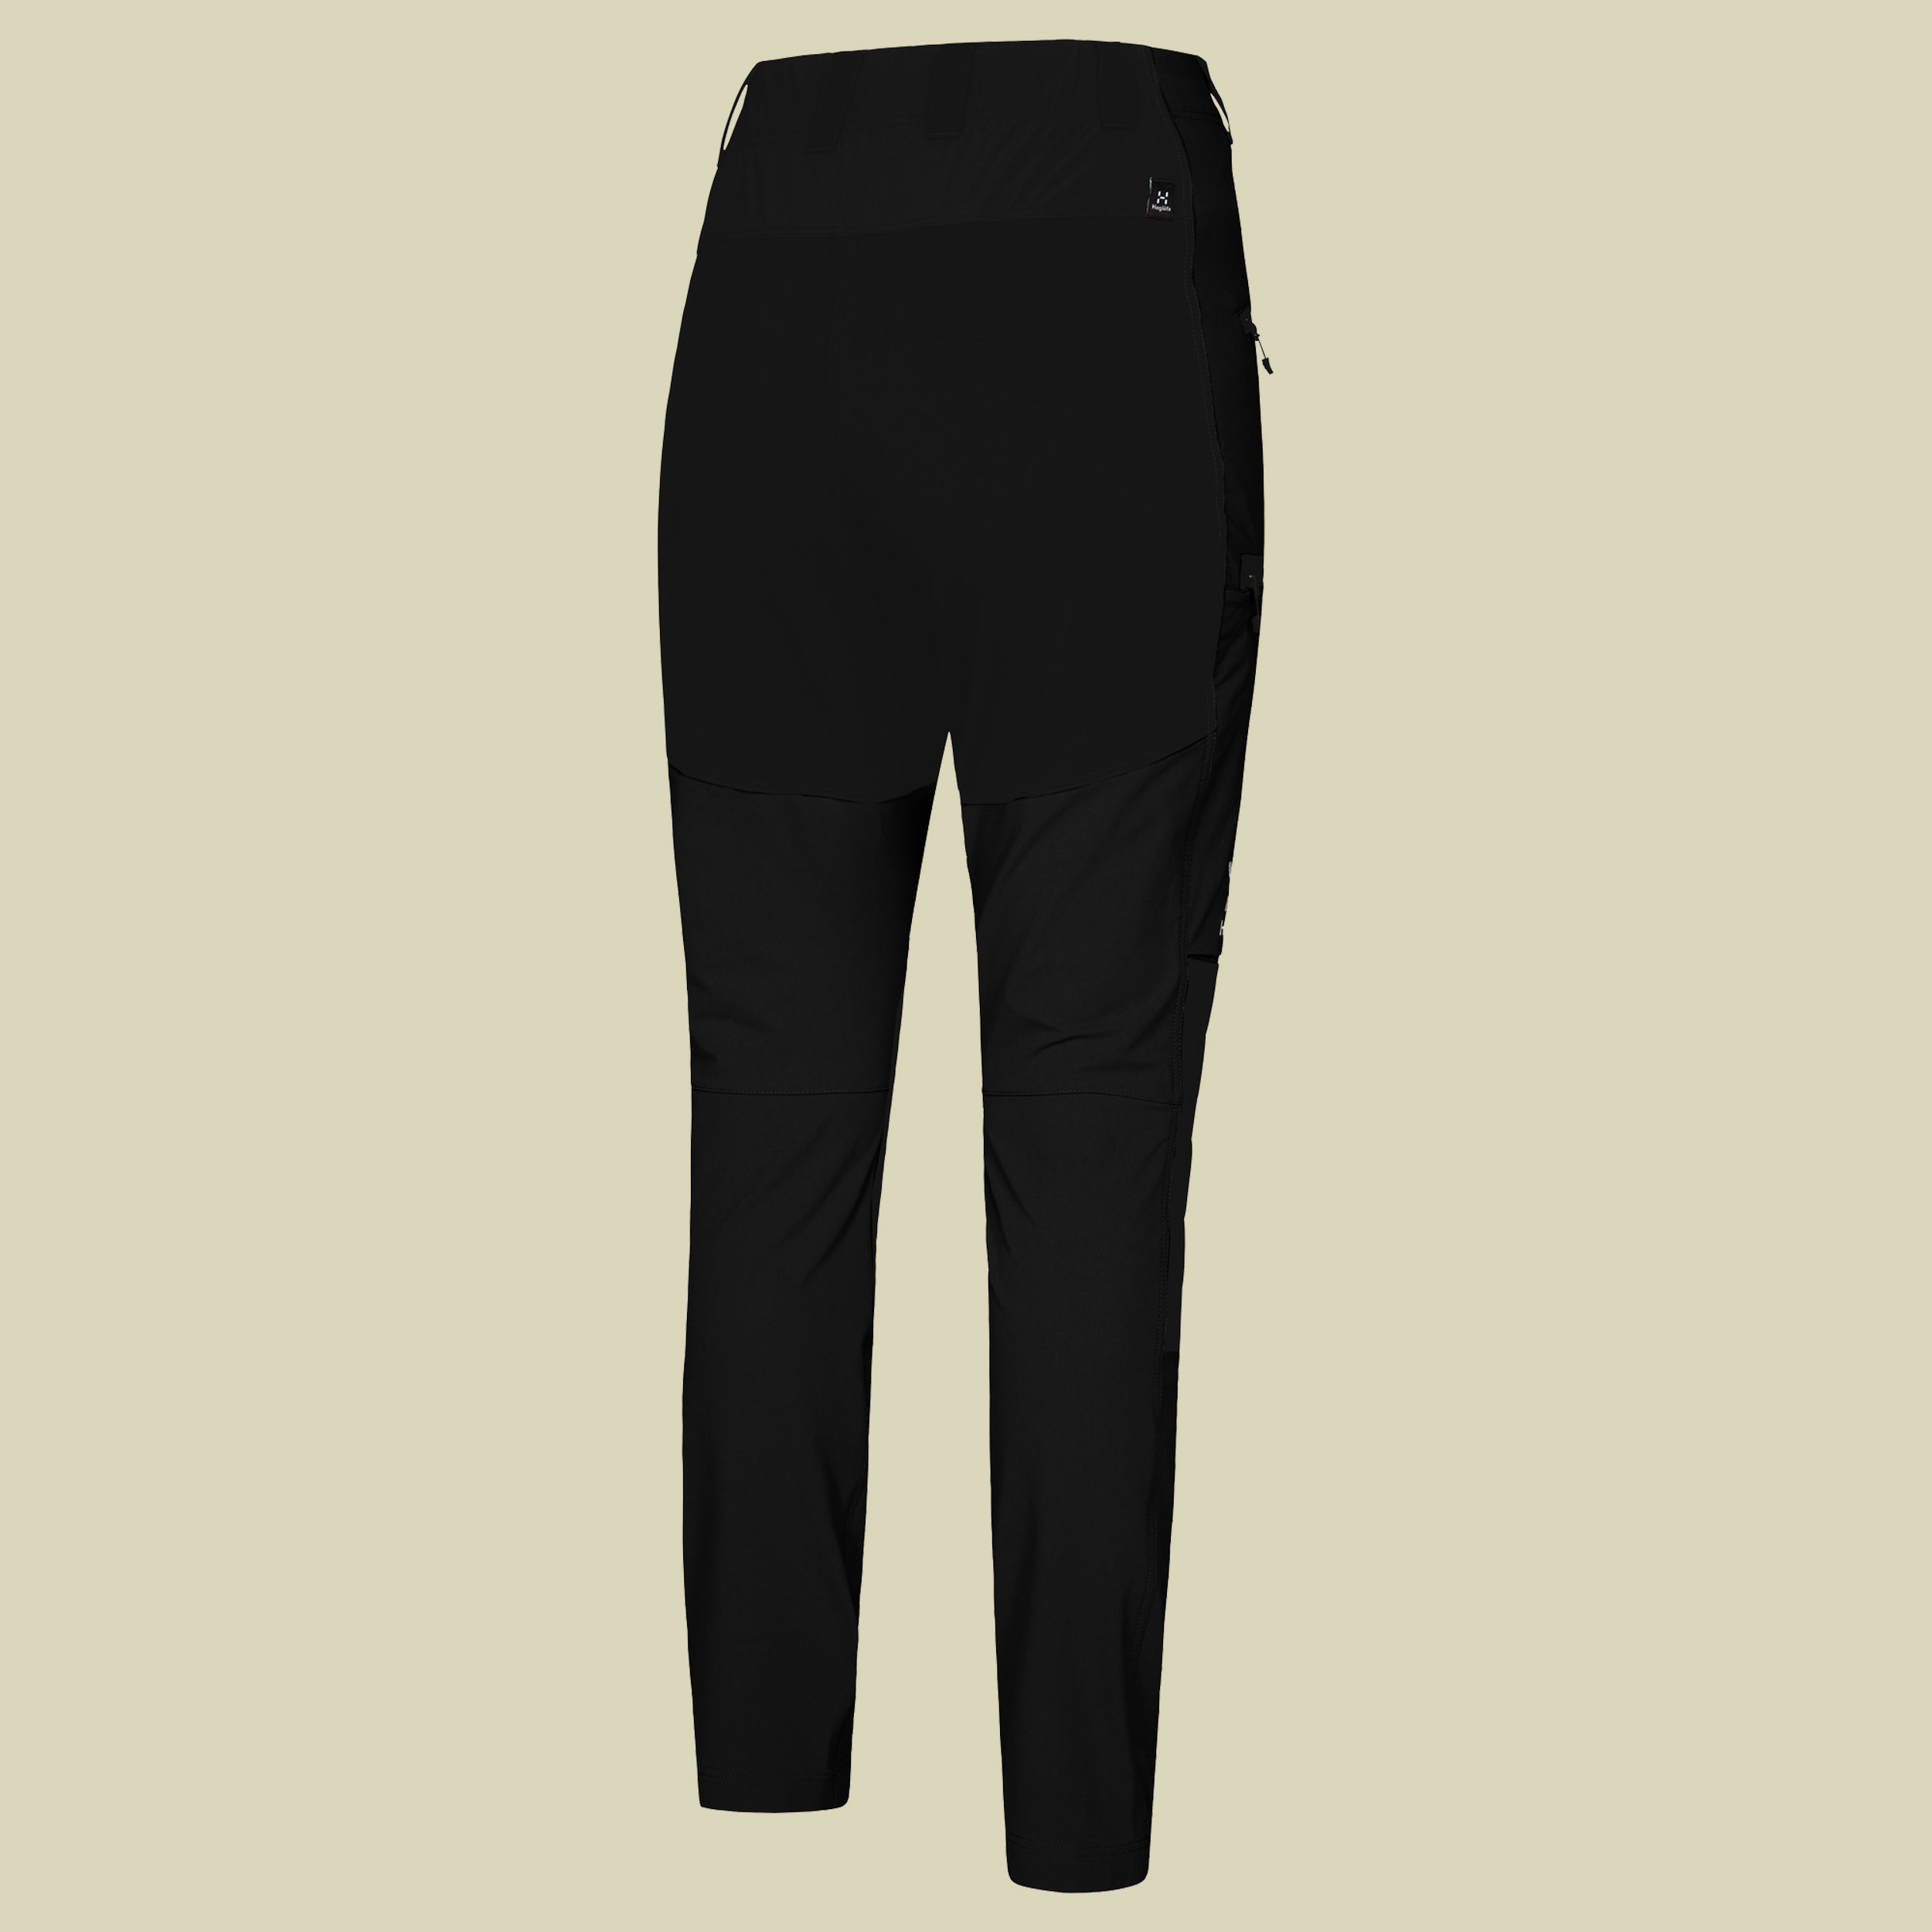 Mid Slim Pant Women Größe 38-long Farbe true black